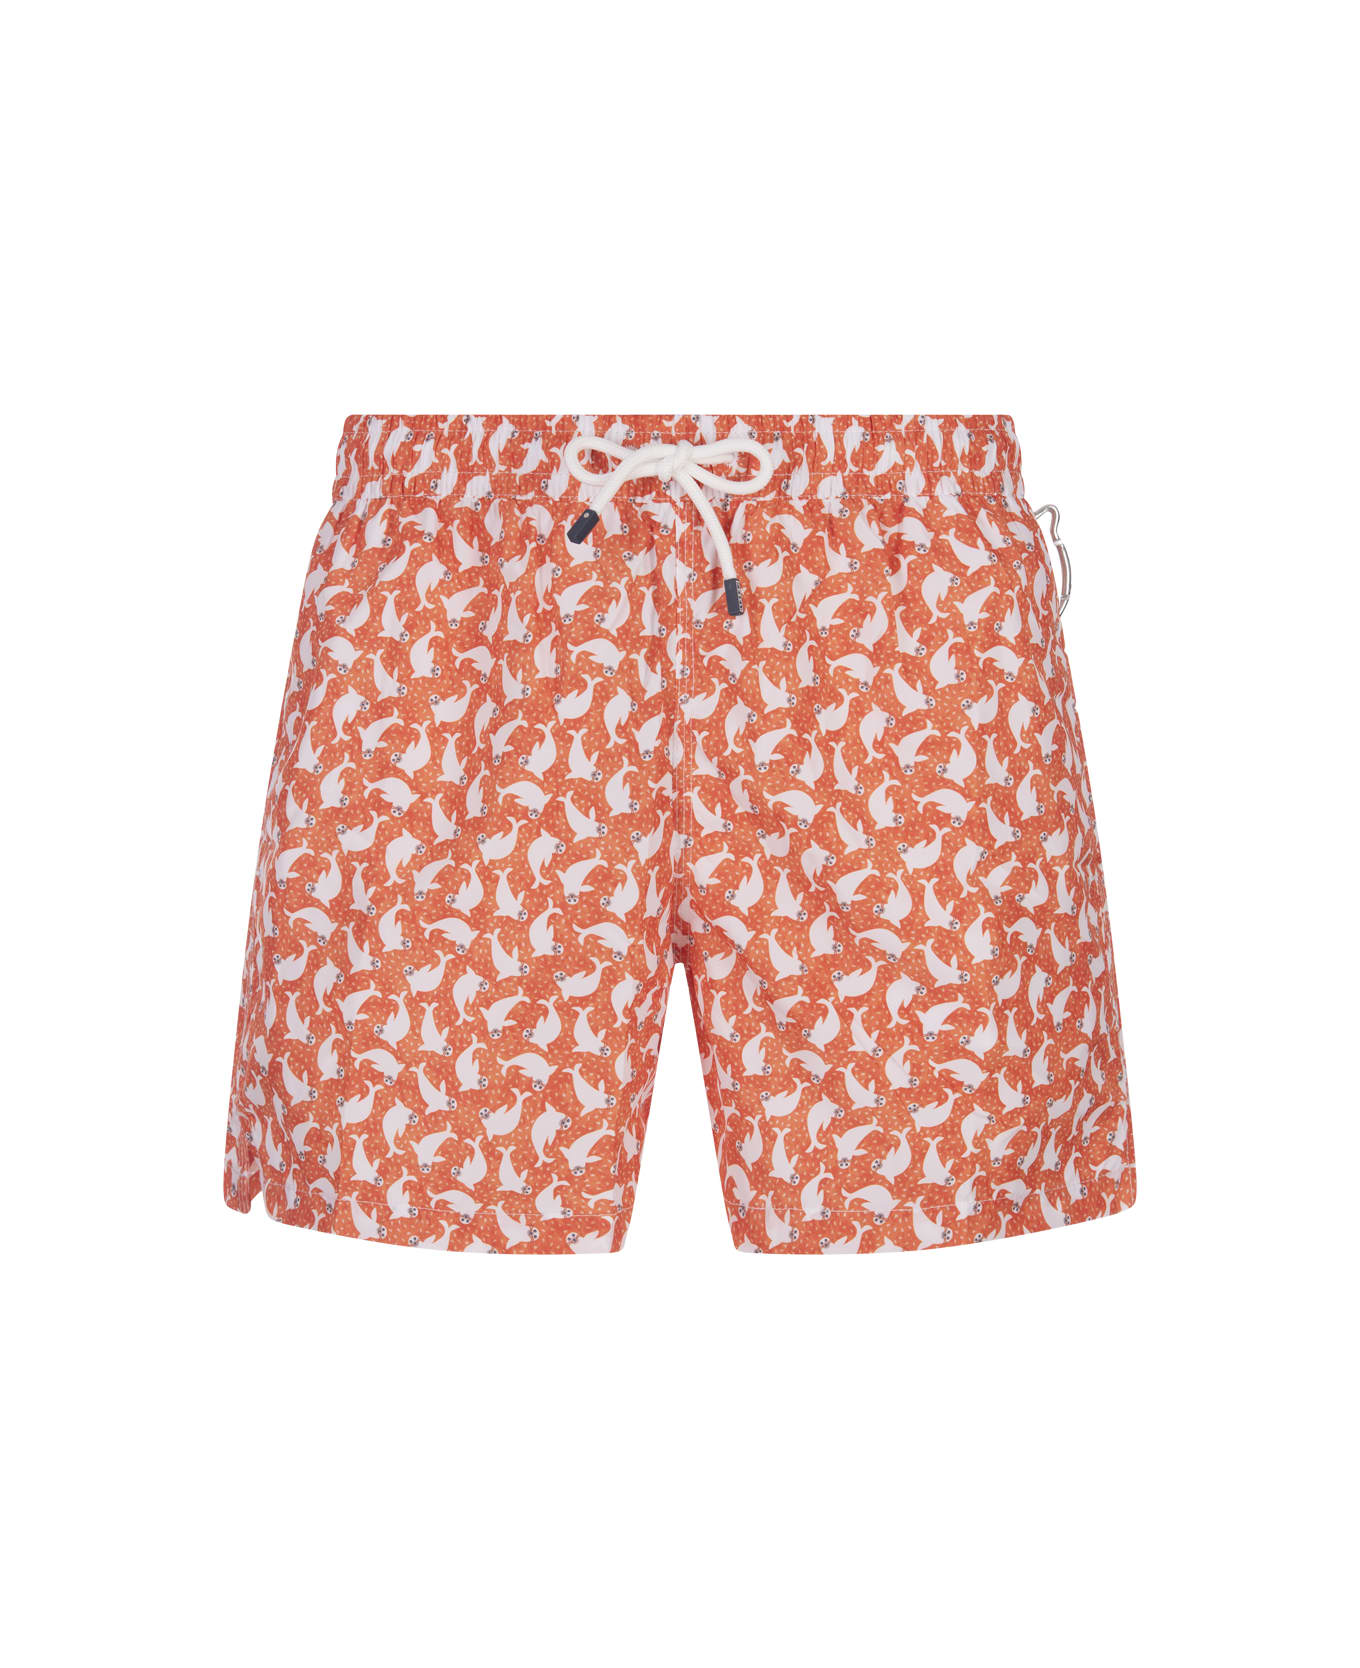 Fedeli Orange Swim Shorts With Seals Pattern - Orange